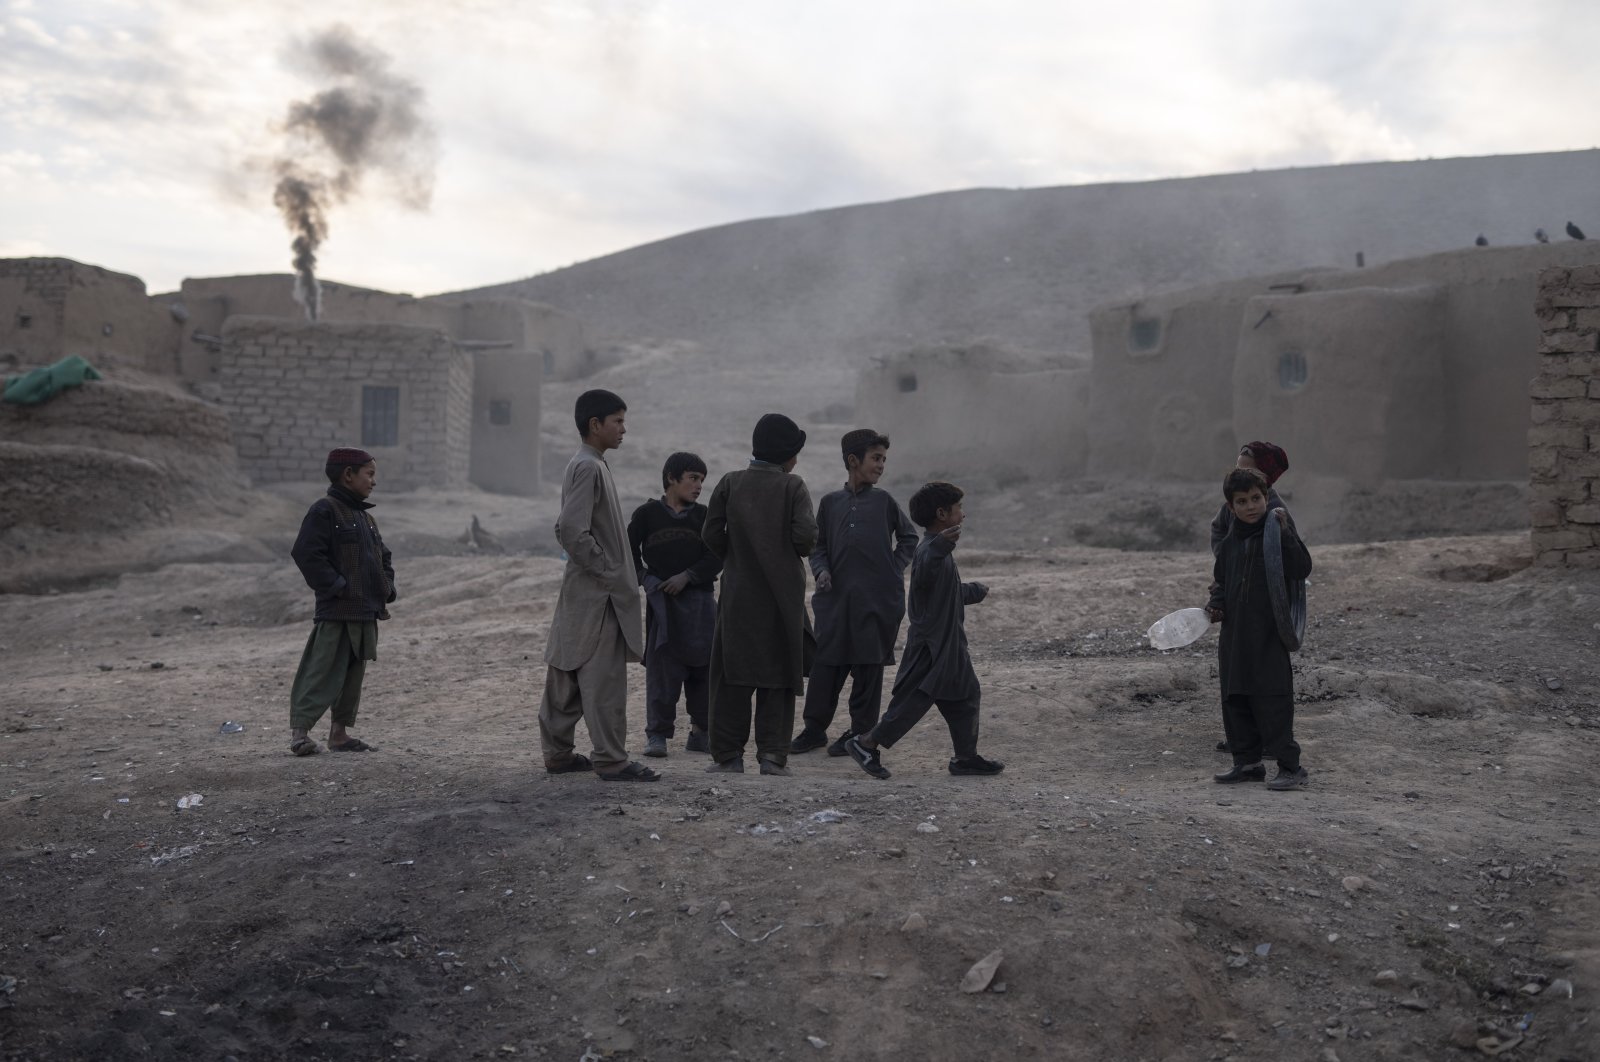 Children play in Kamar Kalagh village near Herat, Afghanistan, Nov. 27, 2021. (AP Photo)